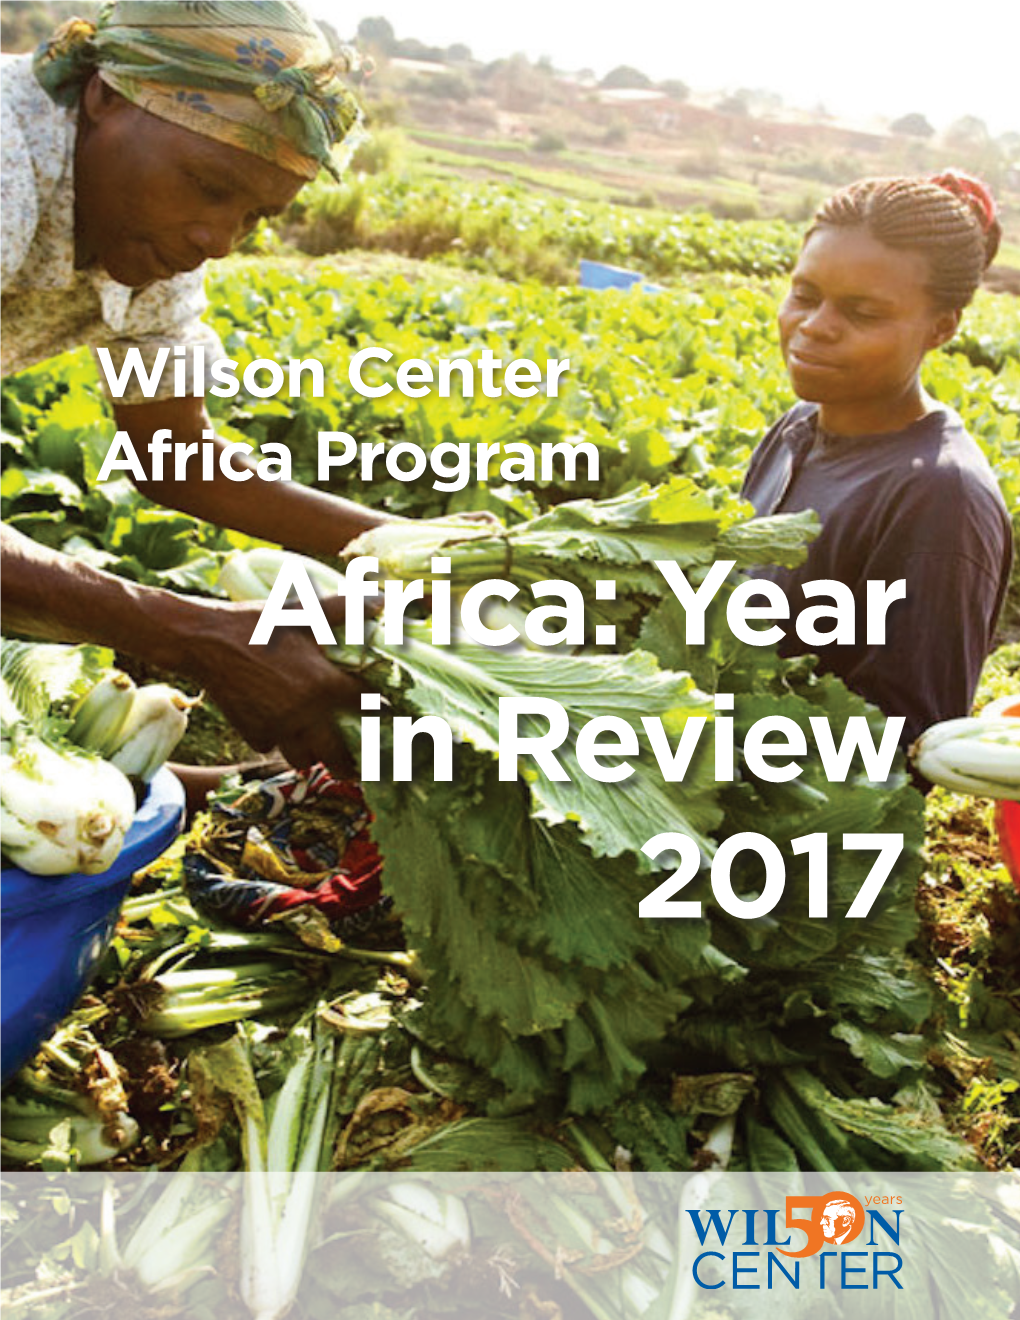 Wilson Center Africa Program Africa: Year in Review 2017